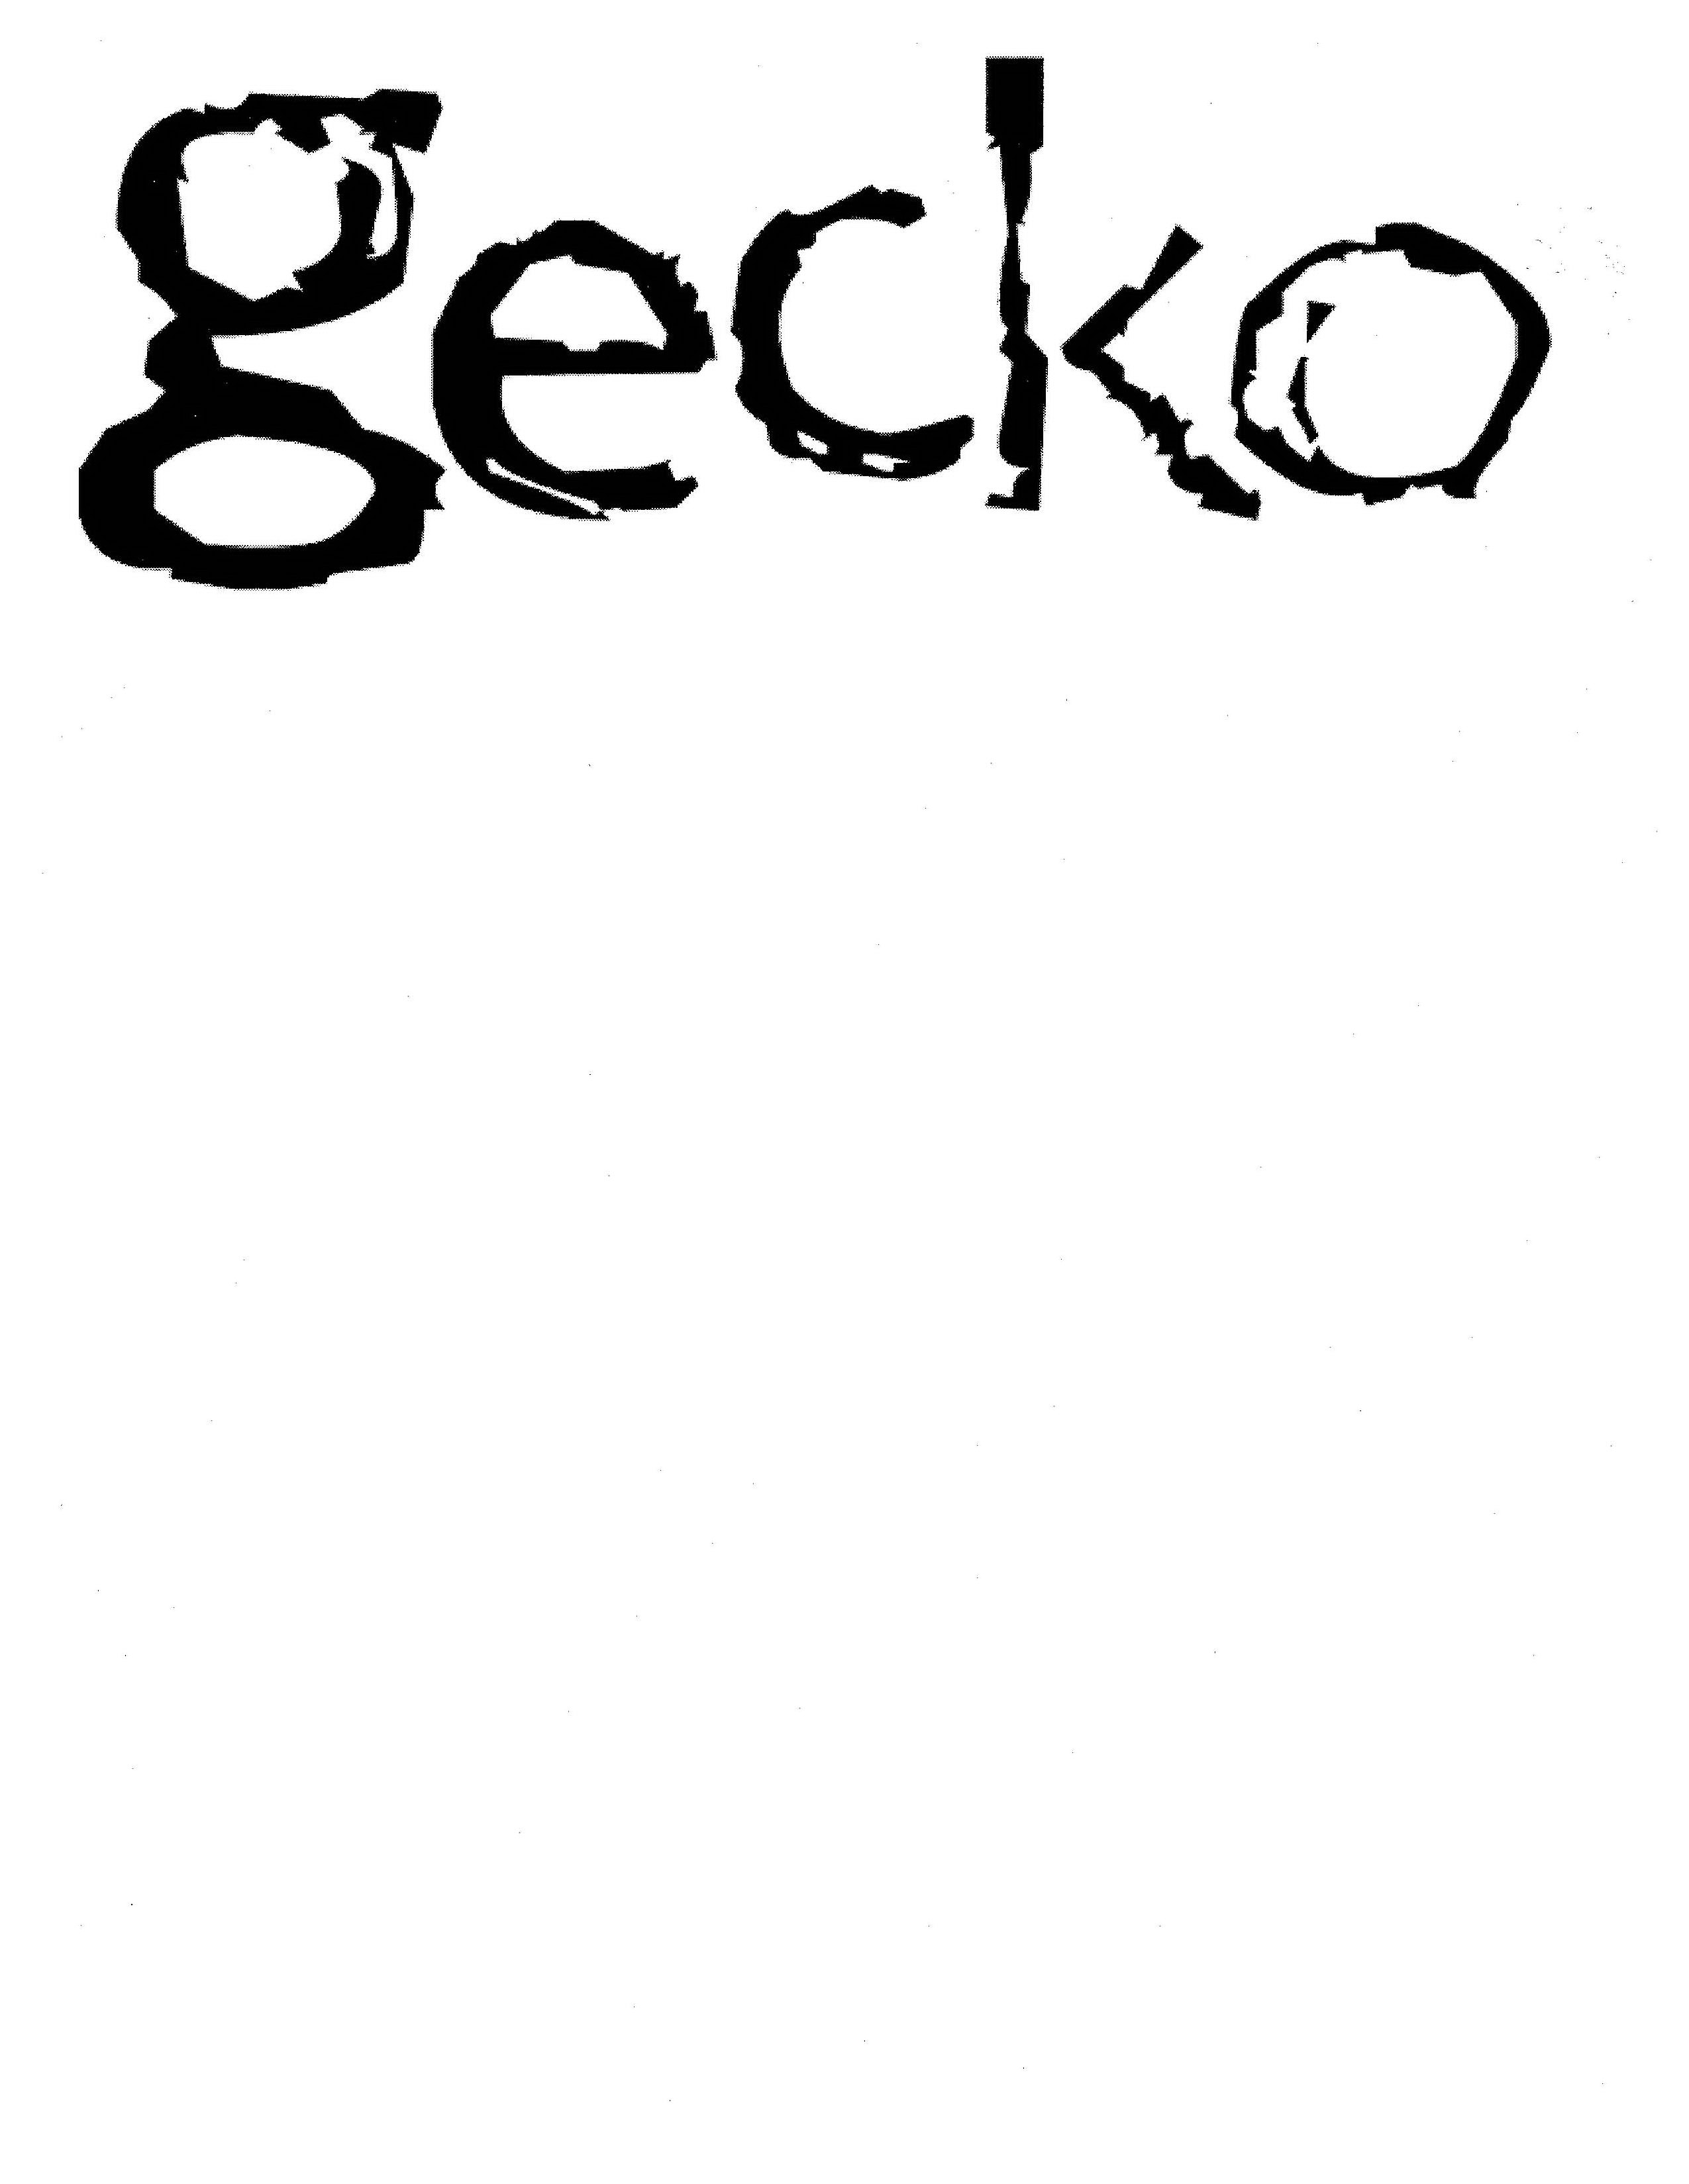 GECKO